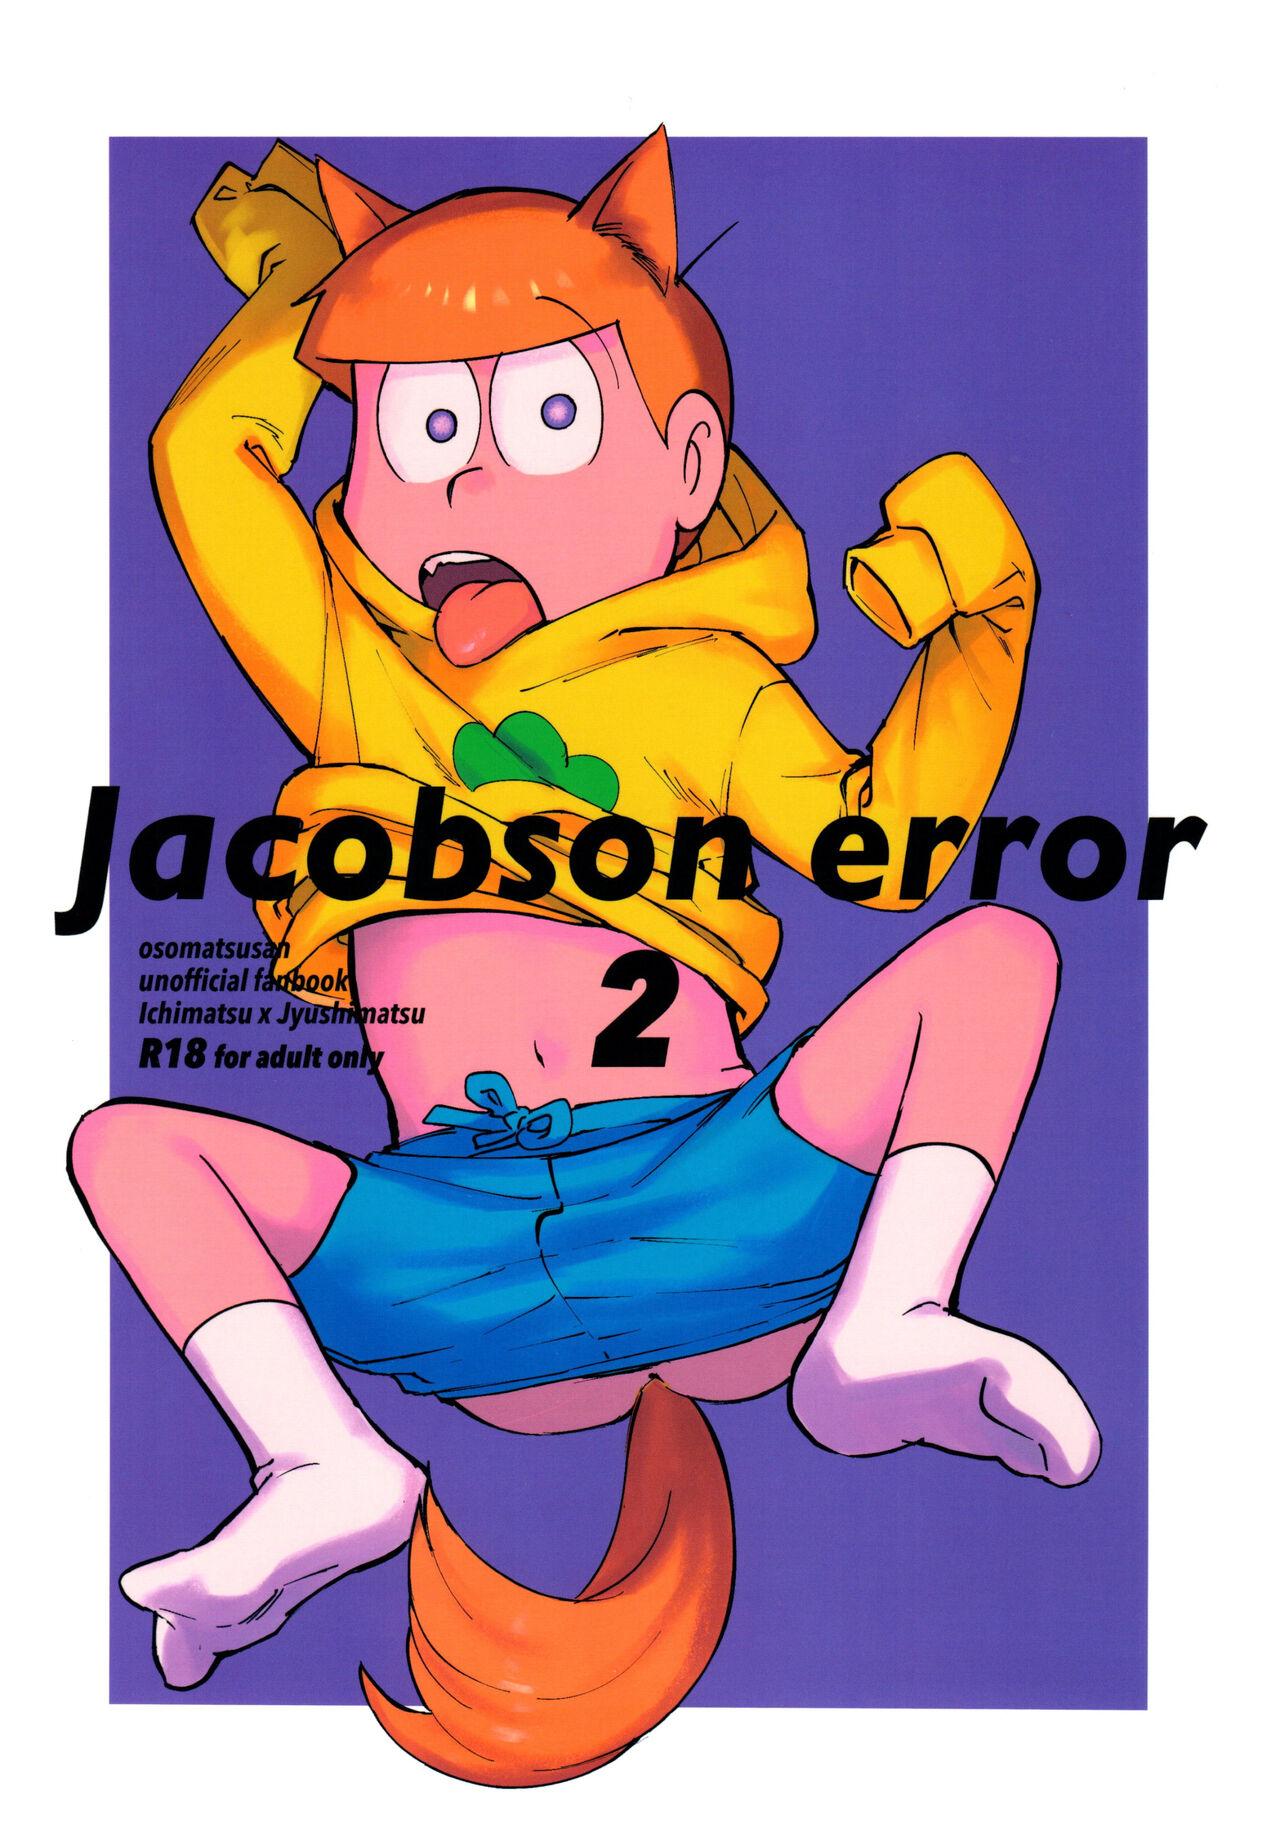 Monster jacobson error2 - Osomatsu san Gloryhole - Picture 1